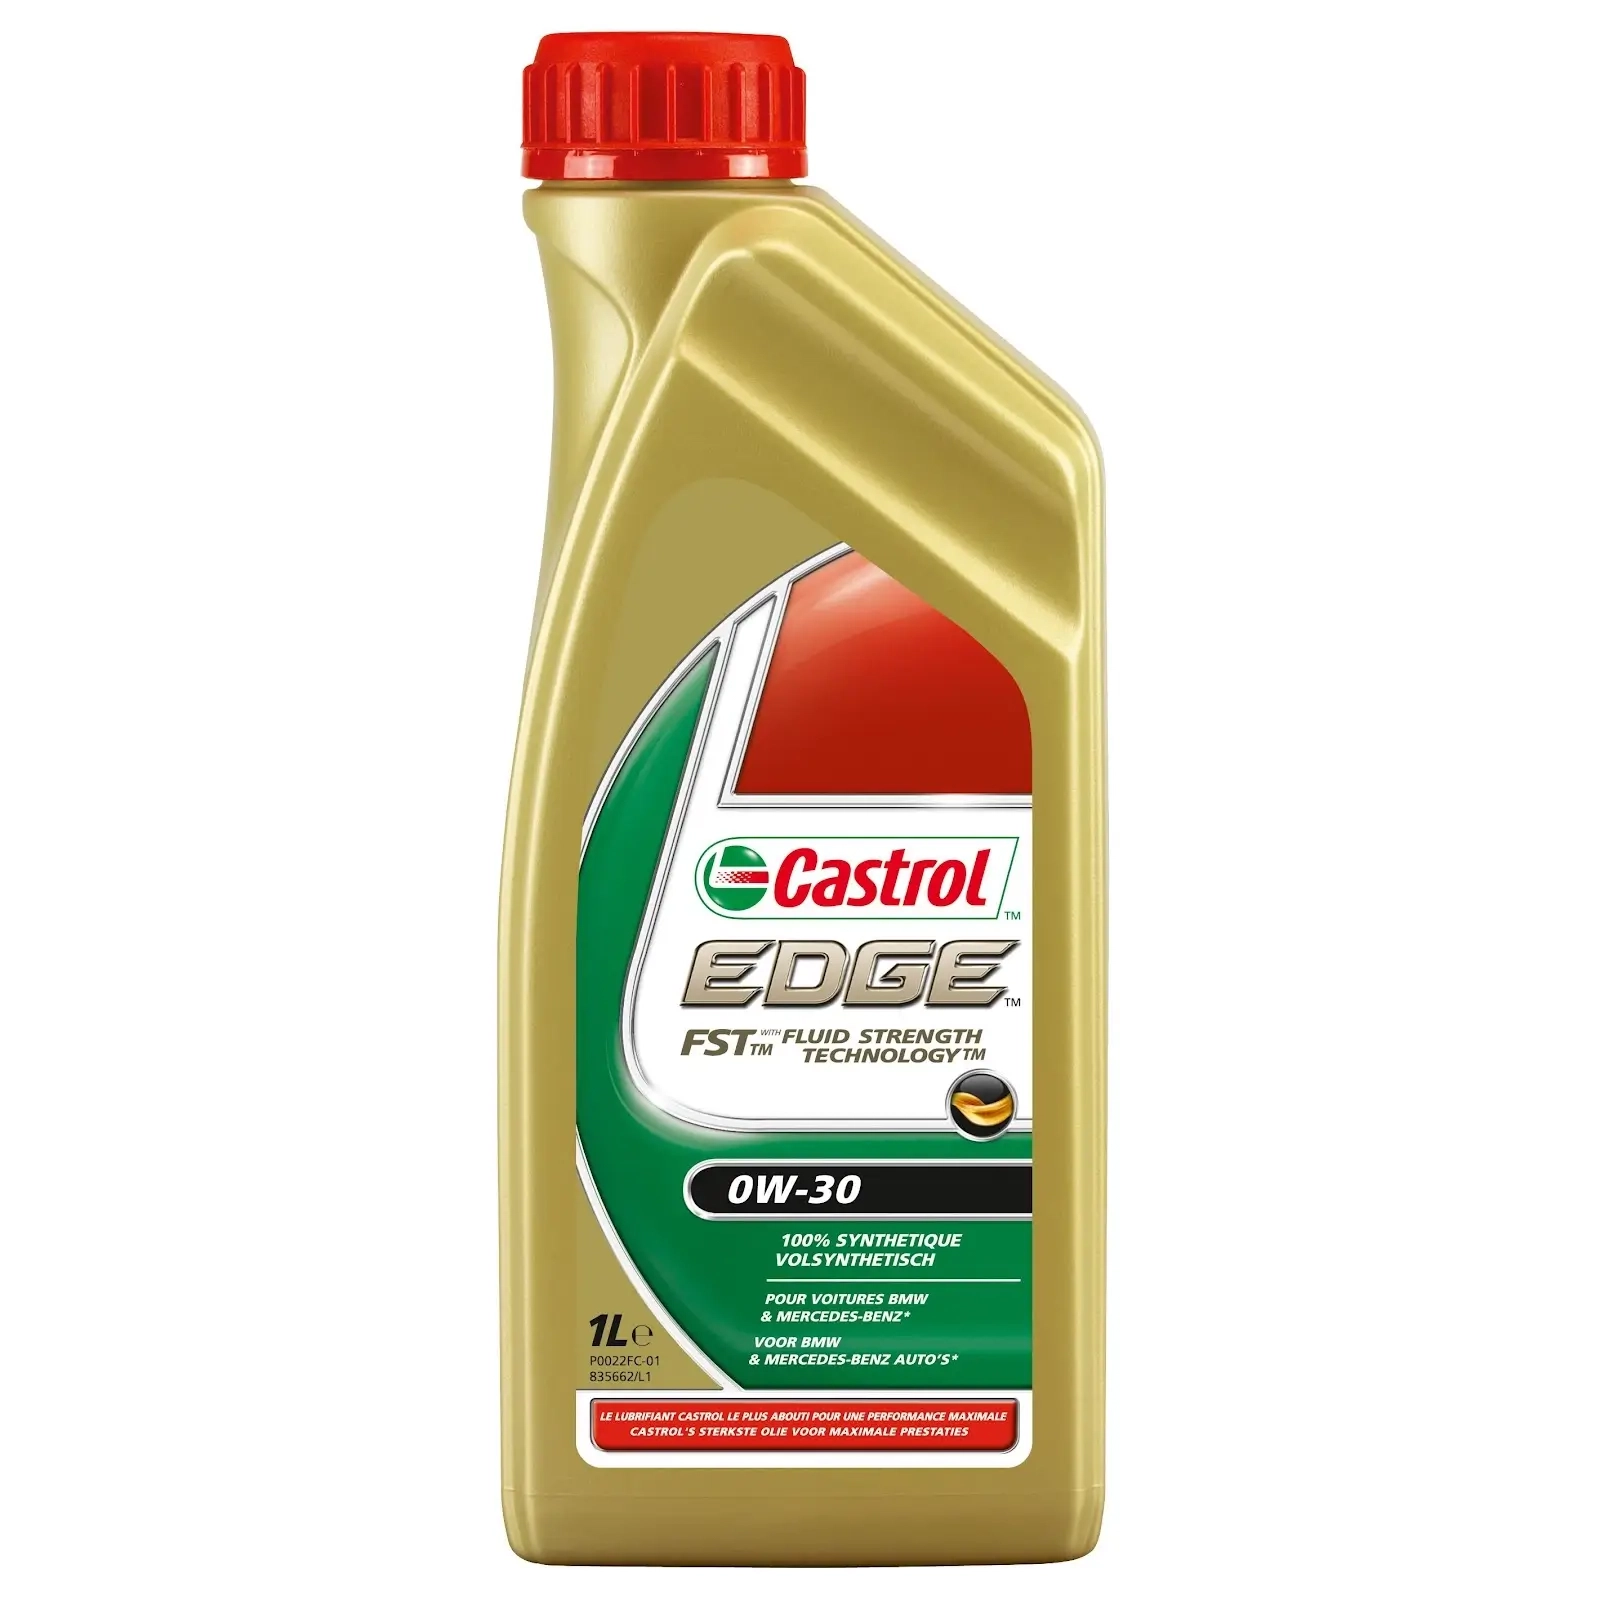 Huiles moteur castrol huile castrol edge shiftech 2 1600 1697551104